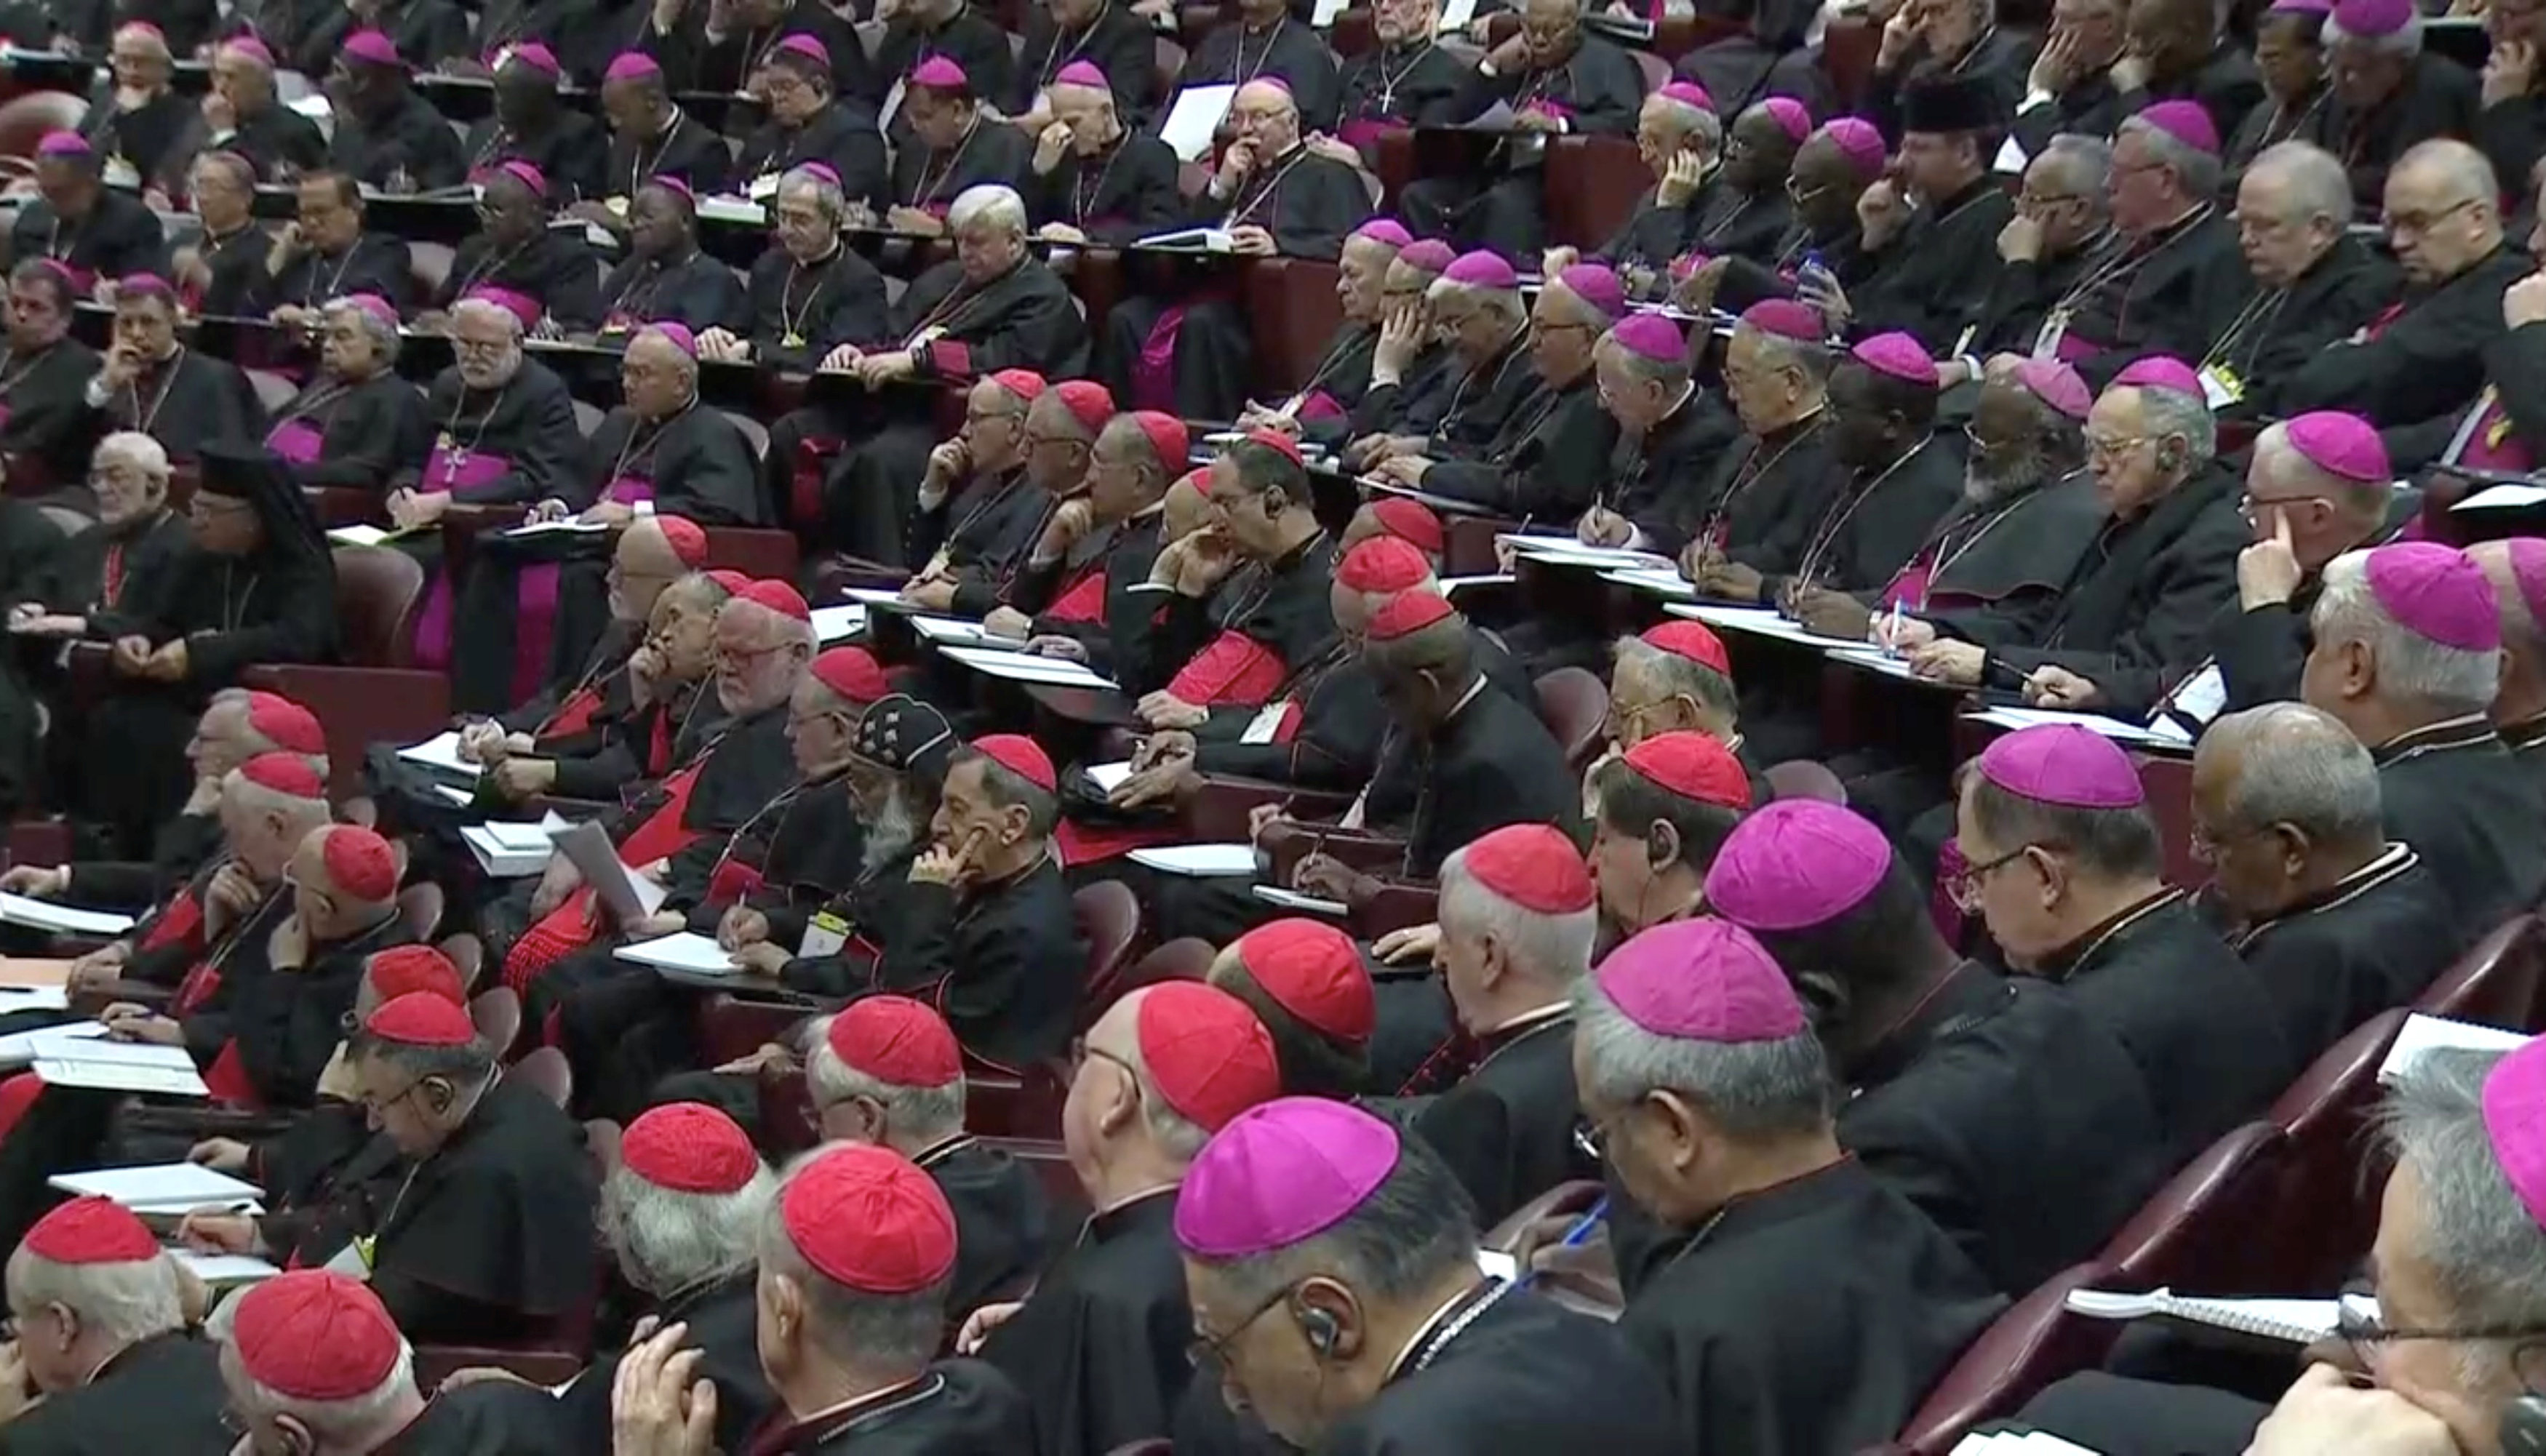 Comienza en el Vaticano la cumbre histórica sobre pederastia